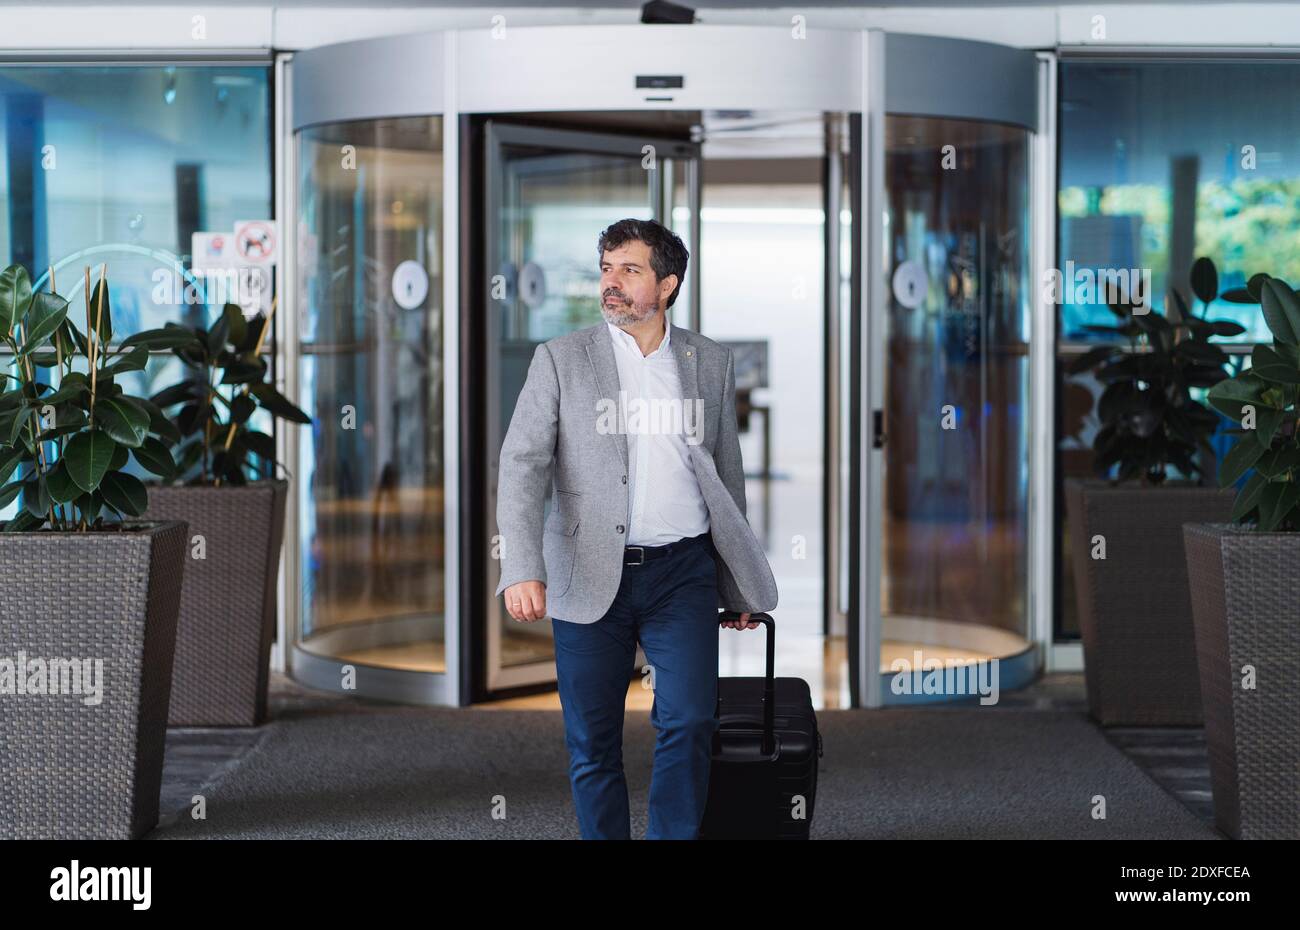 Confident businessman pulling wheeled luggage while entering hotel Stock Photo